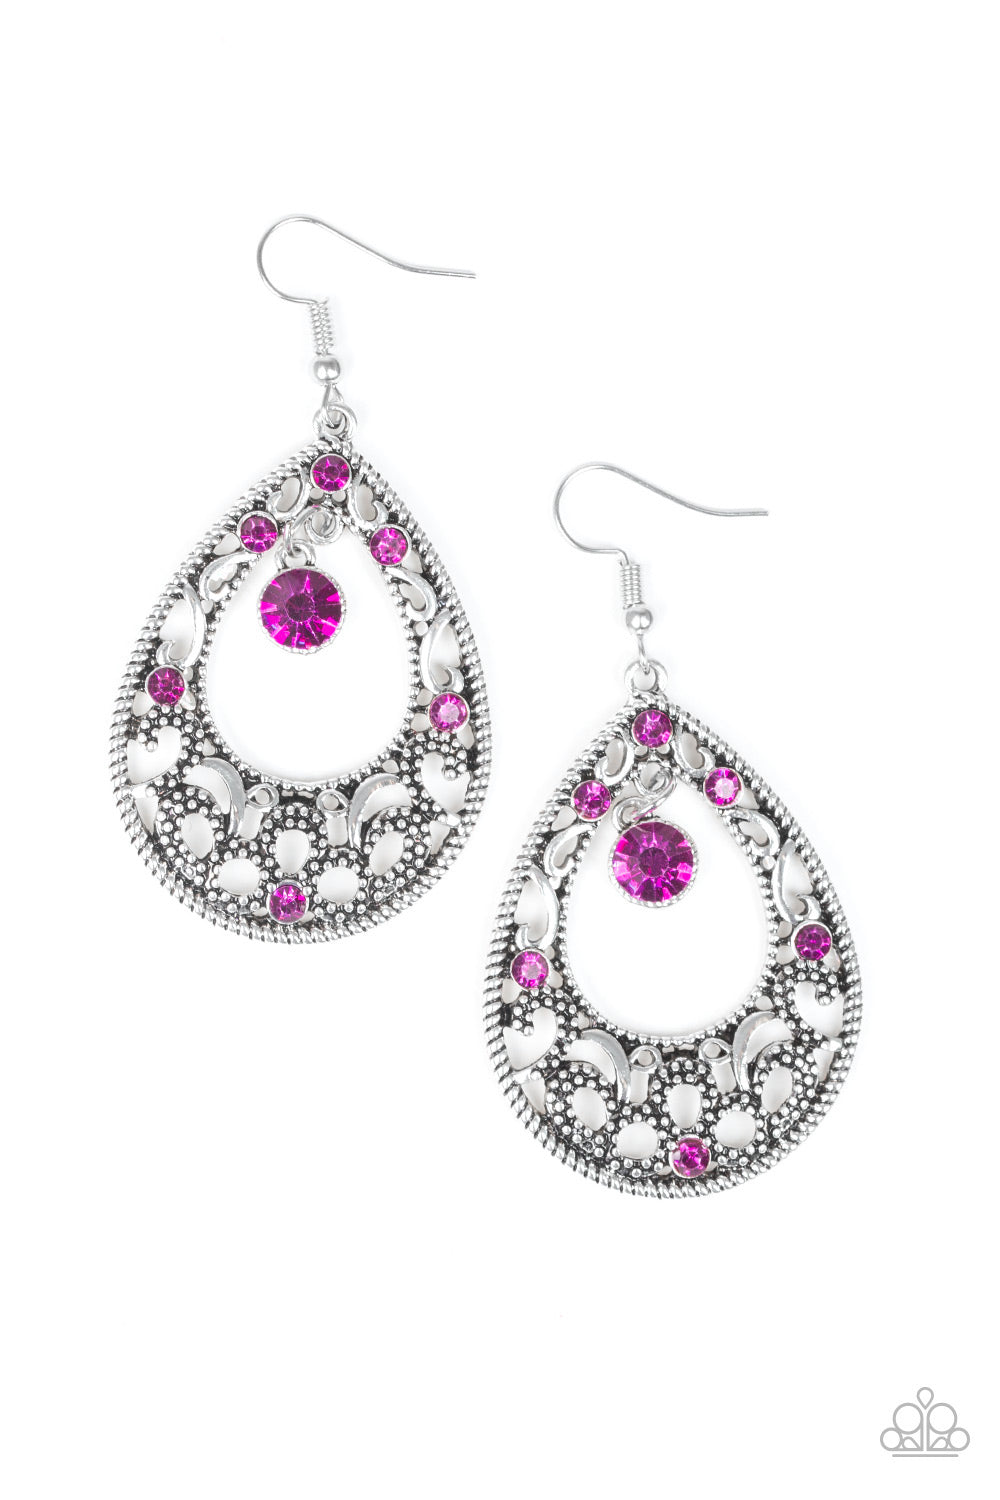 Gotta Get That Glow Pink Paparazzi Earrings Cashmere Pink Jewels - Cashmere Pink Jewels & Accessories, Cashmere Pink Jewels & Accessories - Paparazzi